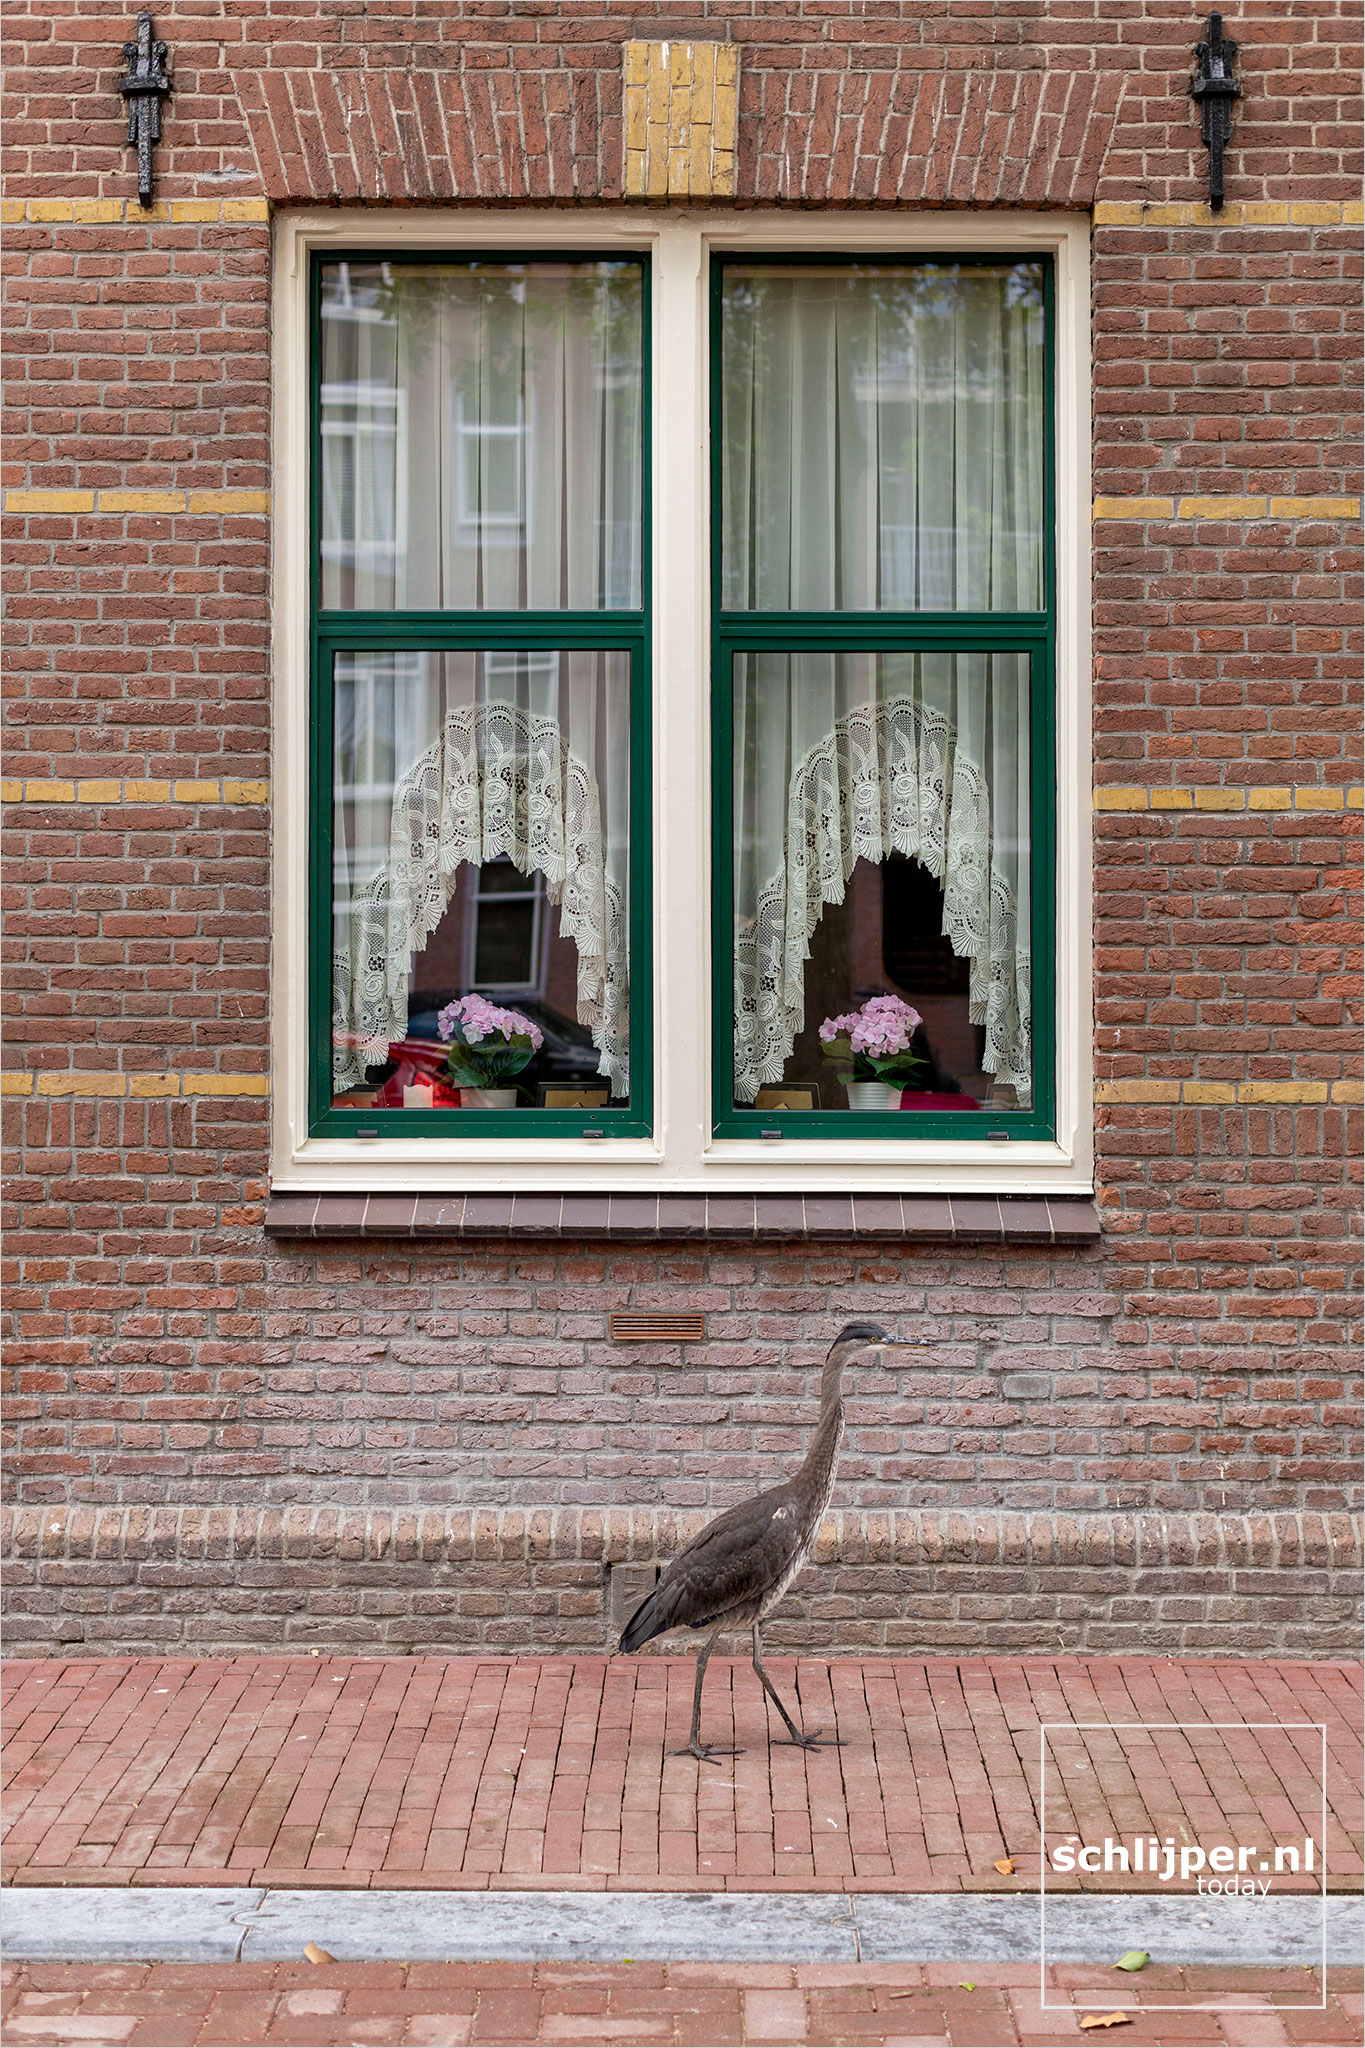 The Netherlands, Amsterdam, 1 augustus 2021